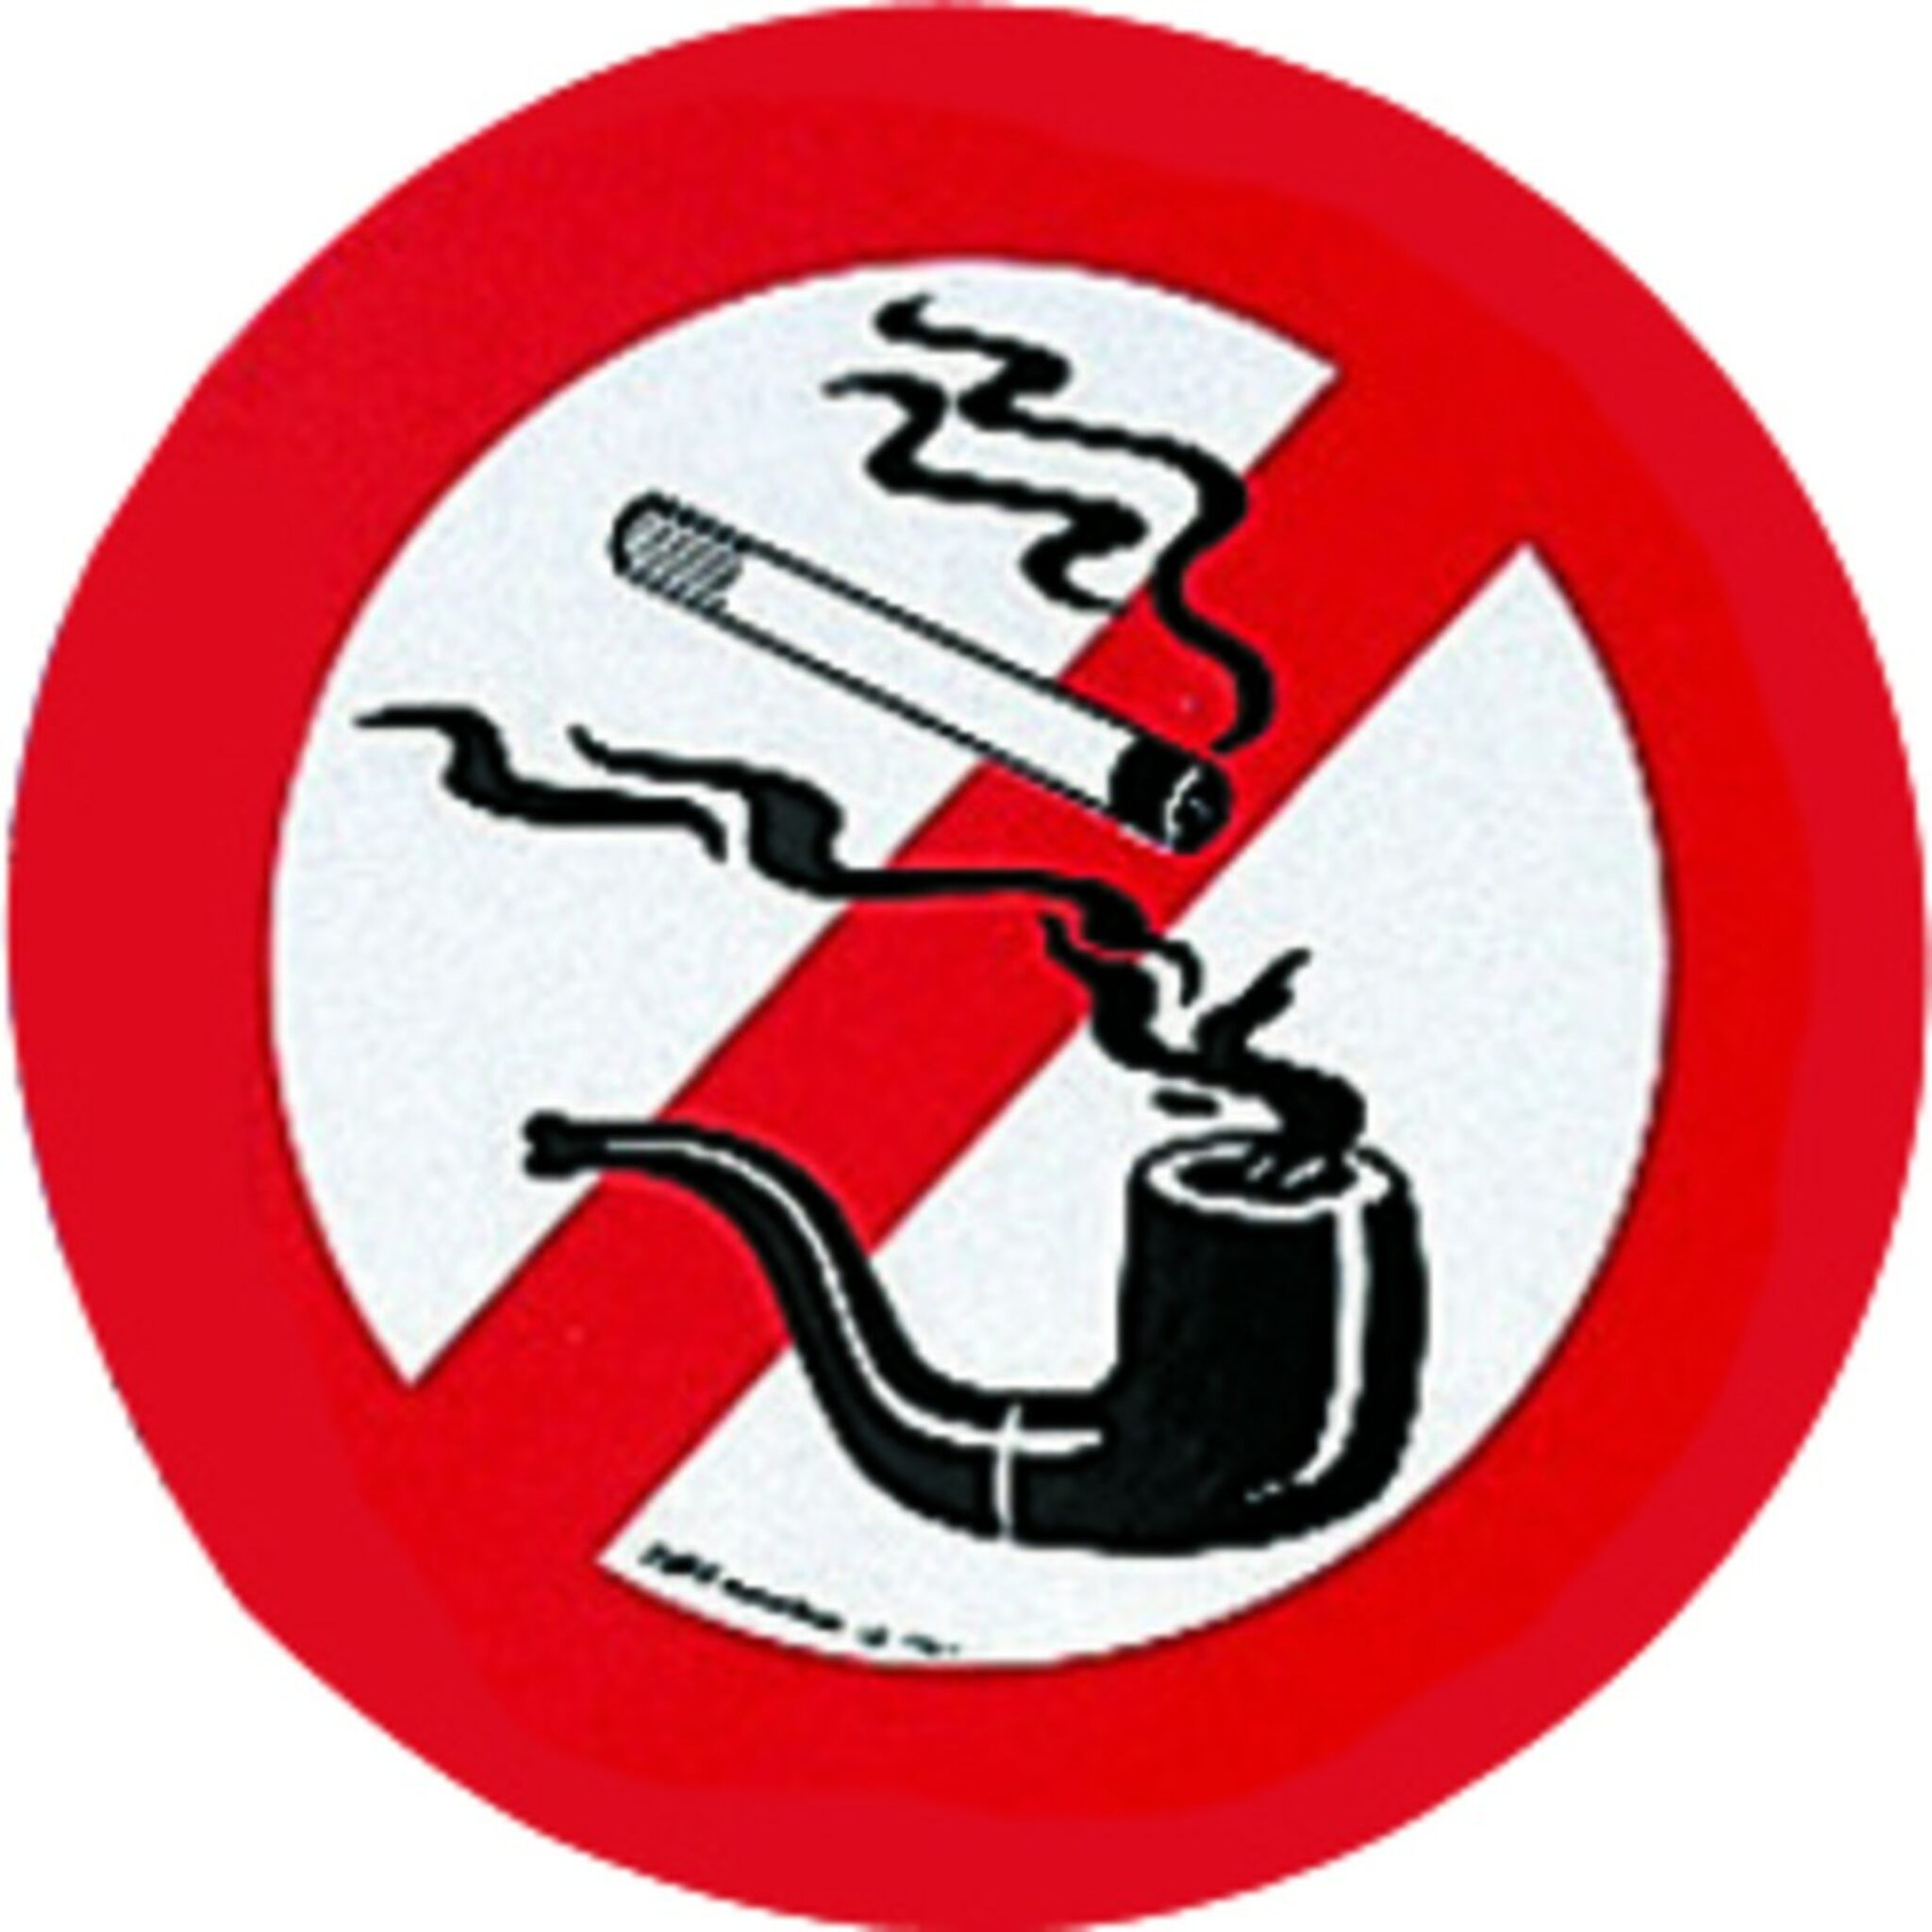 Prohibition sign: No smoking - sticker, self-adhesive